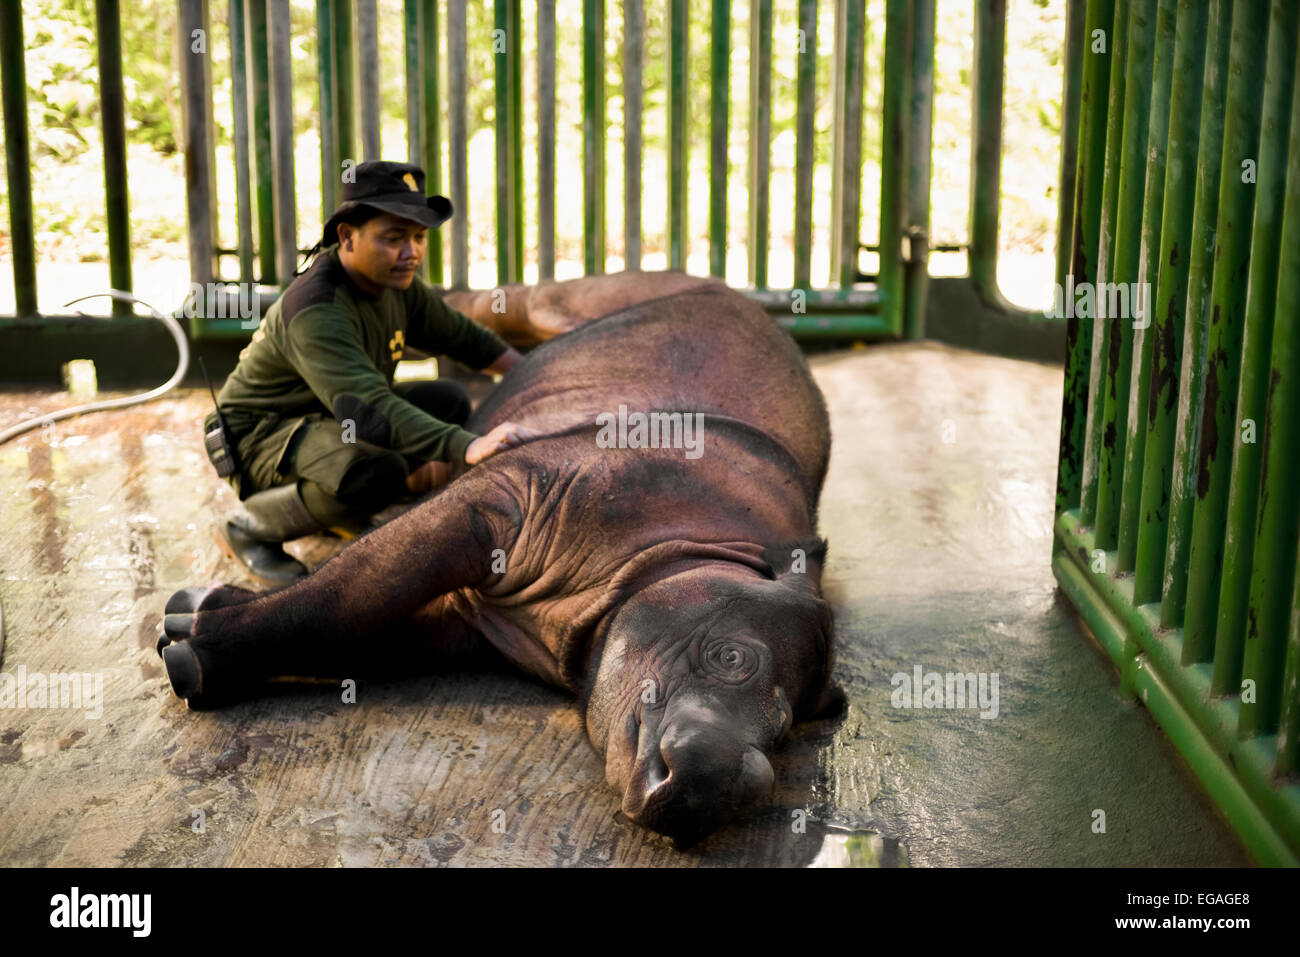 A national park ranger examine Andatu, the first Sumatran rhinoceros born in captivity in Indonesia. Stock Photo